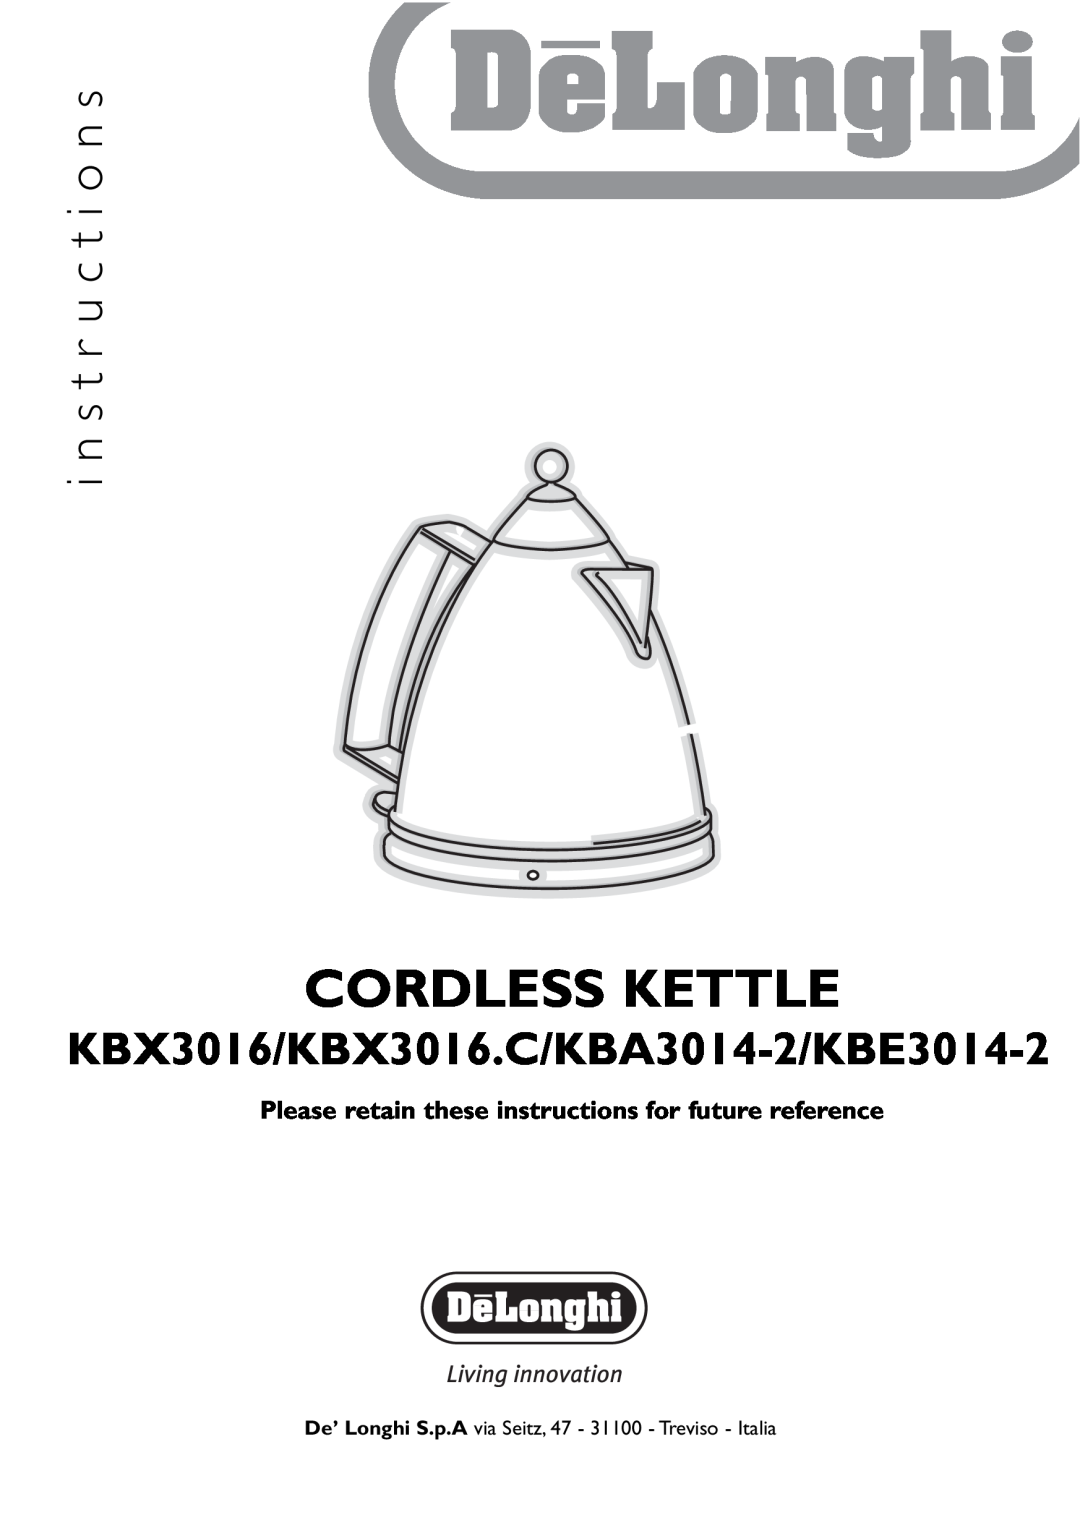 DeLonghi manual Cordless Kettle, i n s t r u c t i o n s, KBX3016/KBA3014-2/KBE3014-2 